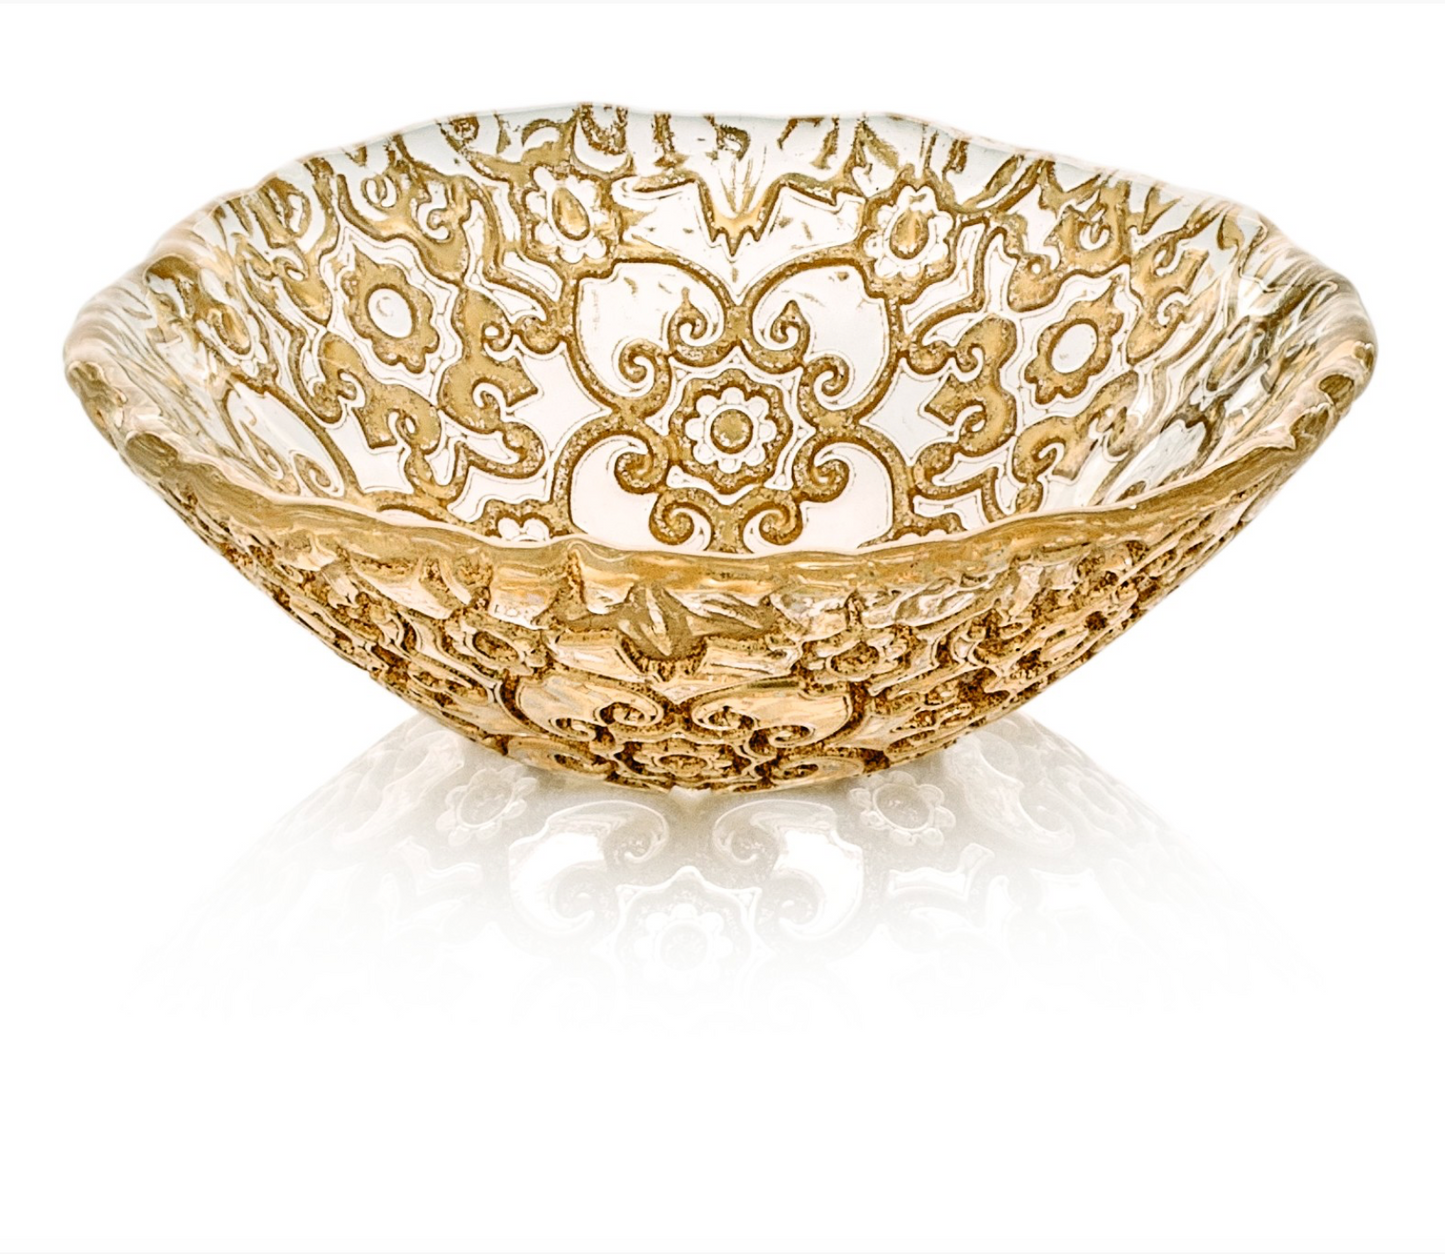 IVV Arabesque Individual Bowl 16cm Gold Leaf Decoration